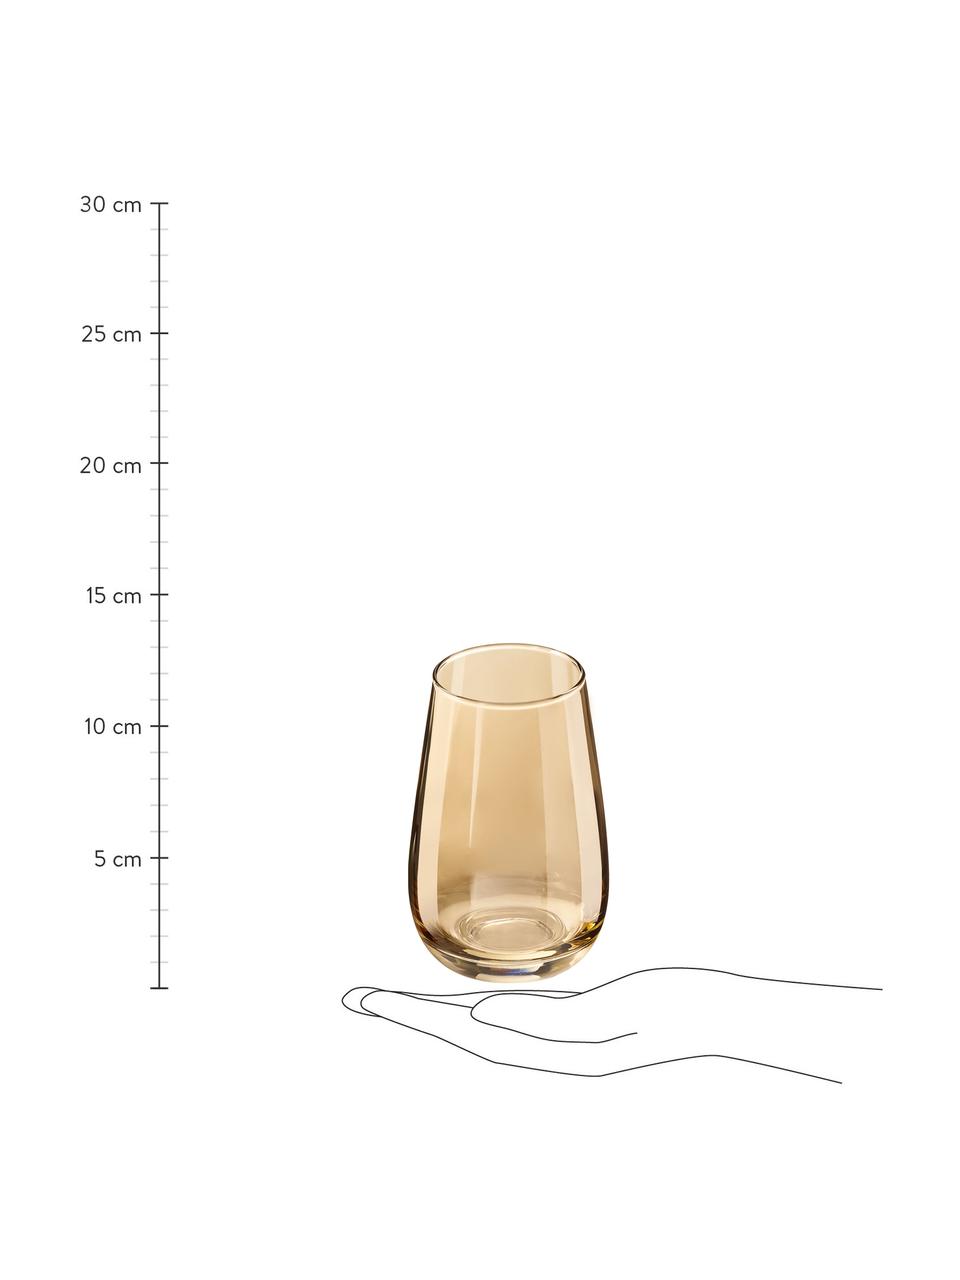 Wassergläser Shiny, 4 Stück, Glas, Braun, Ø 8 x H 13 cm, 310 ml